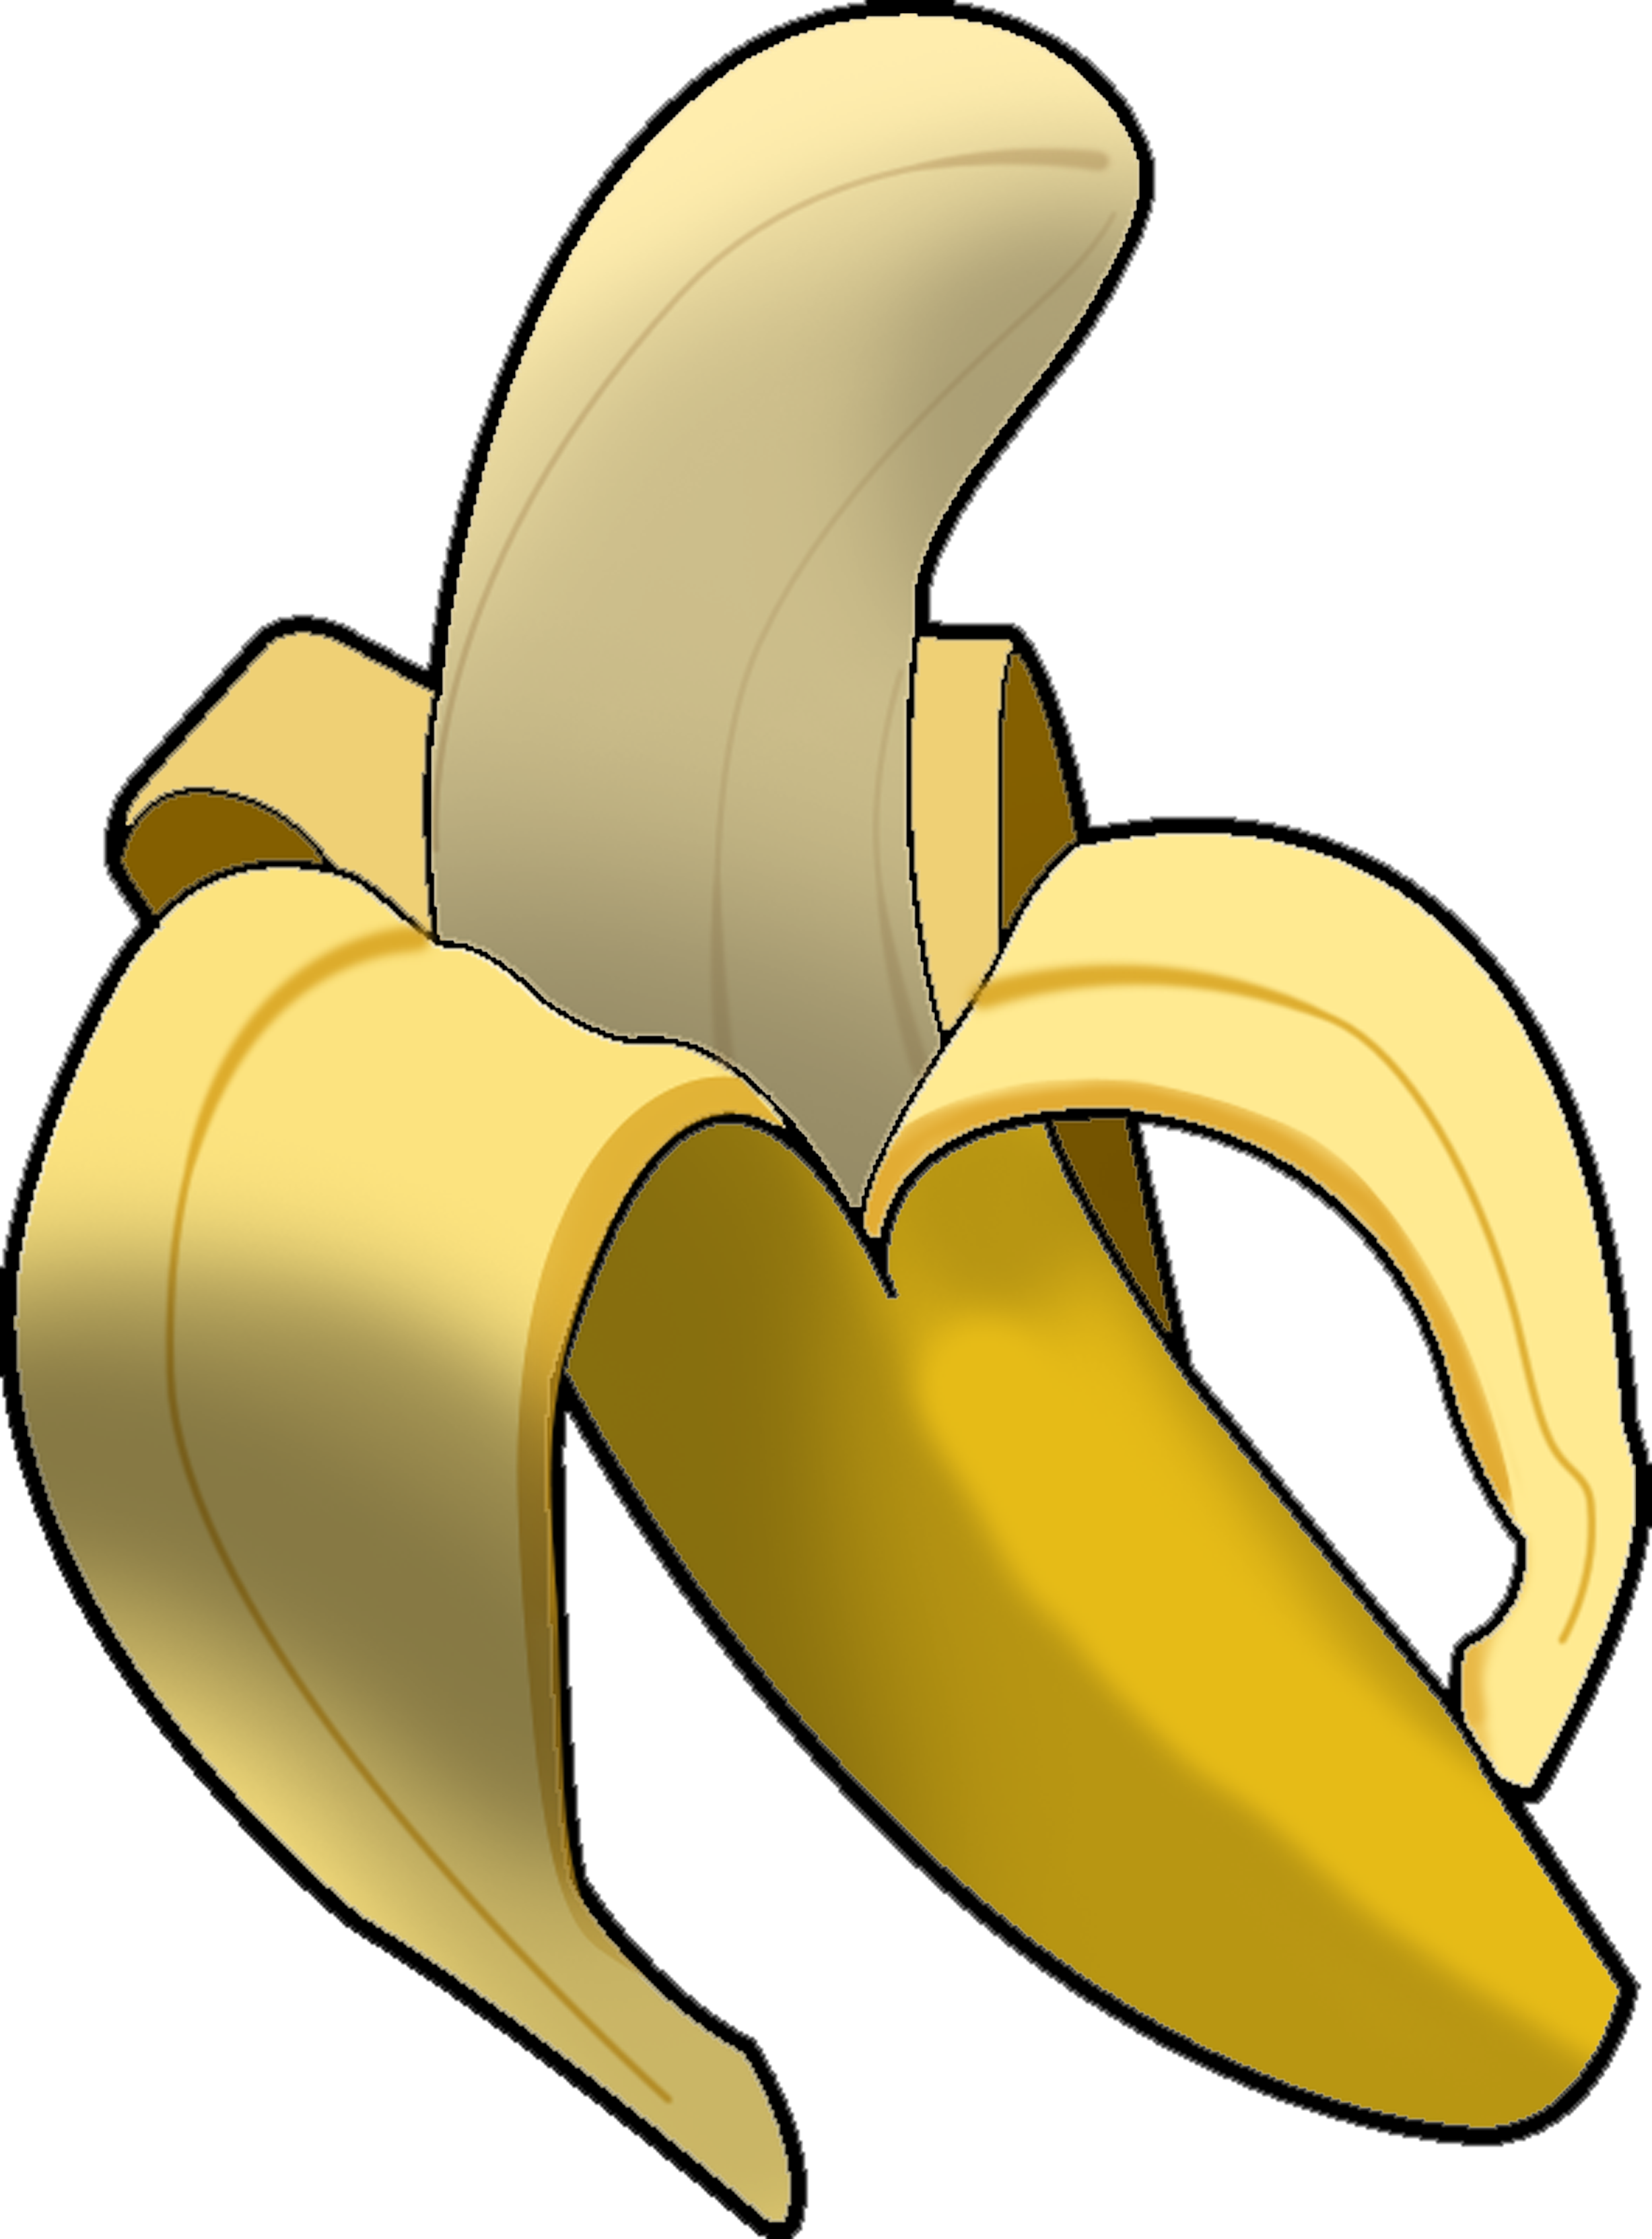 Banana Cartoon Picture Cliparts Co